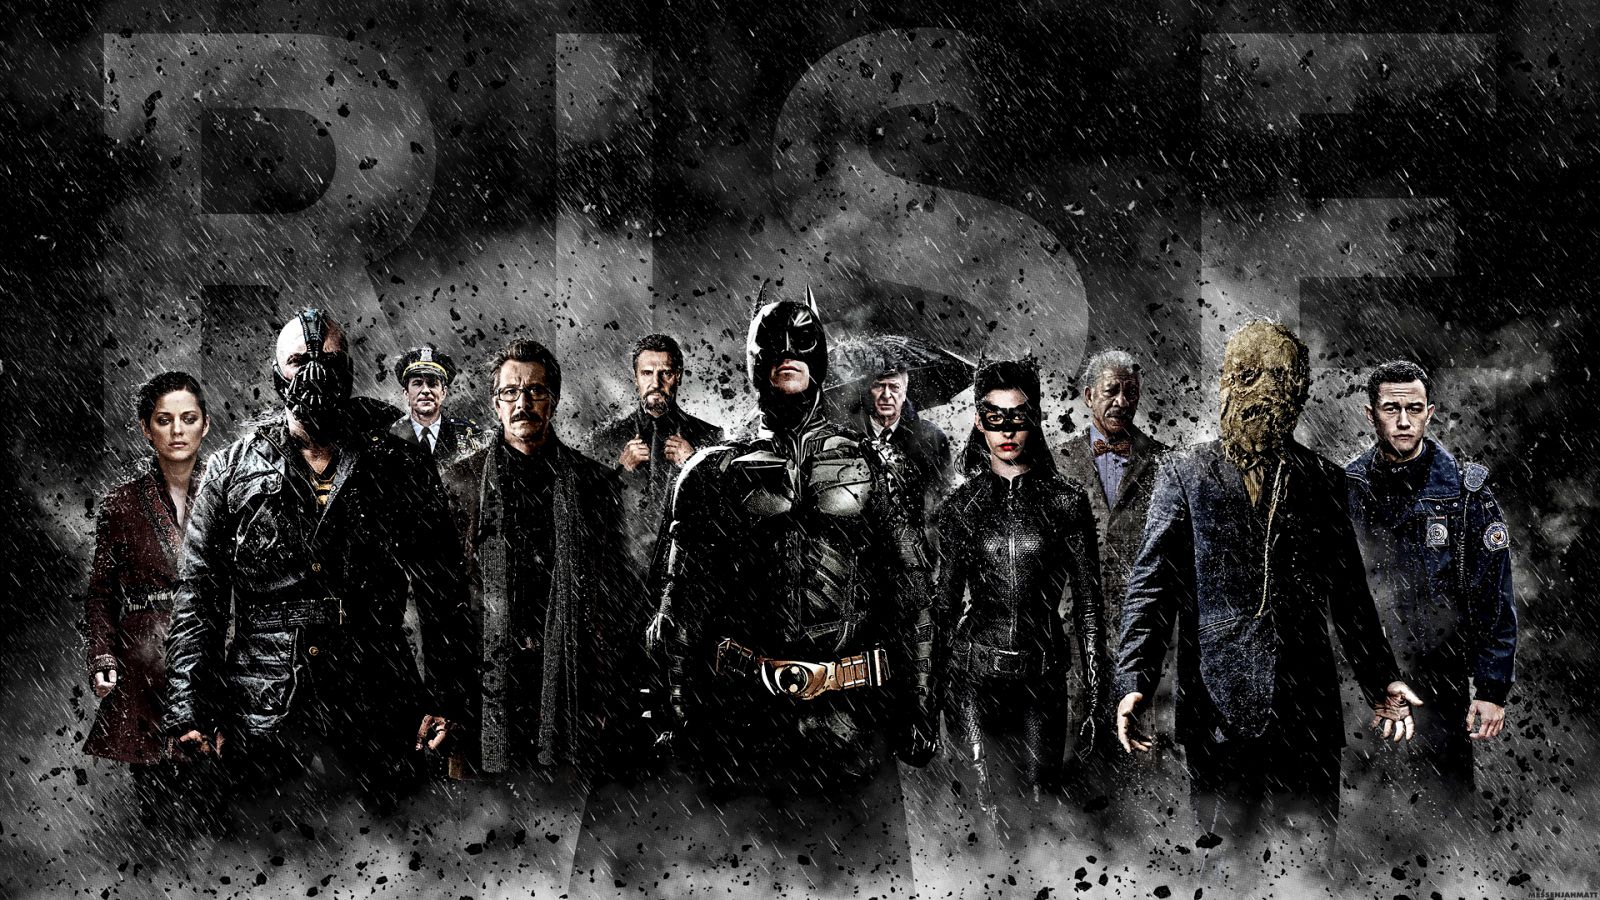 Central Wallpaper: Batman The Dark Knight Rises 2012 HD Poster Wallpaper